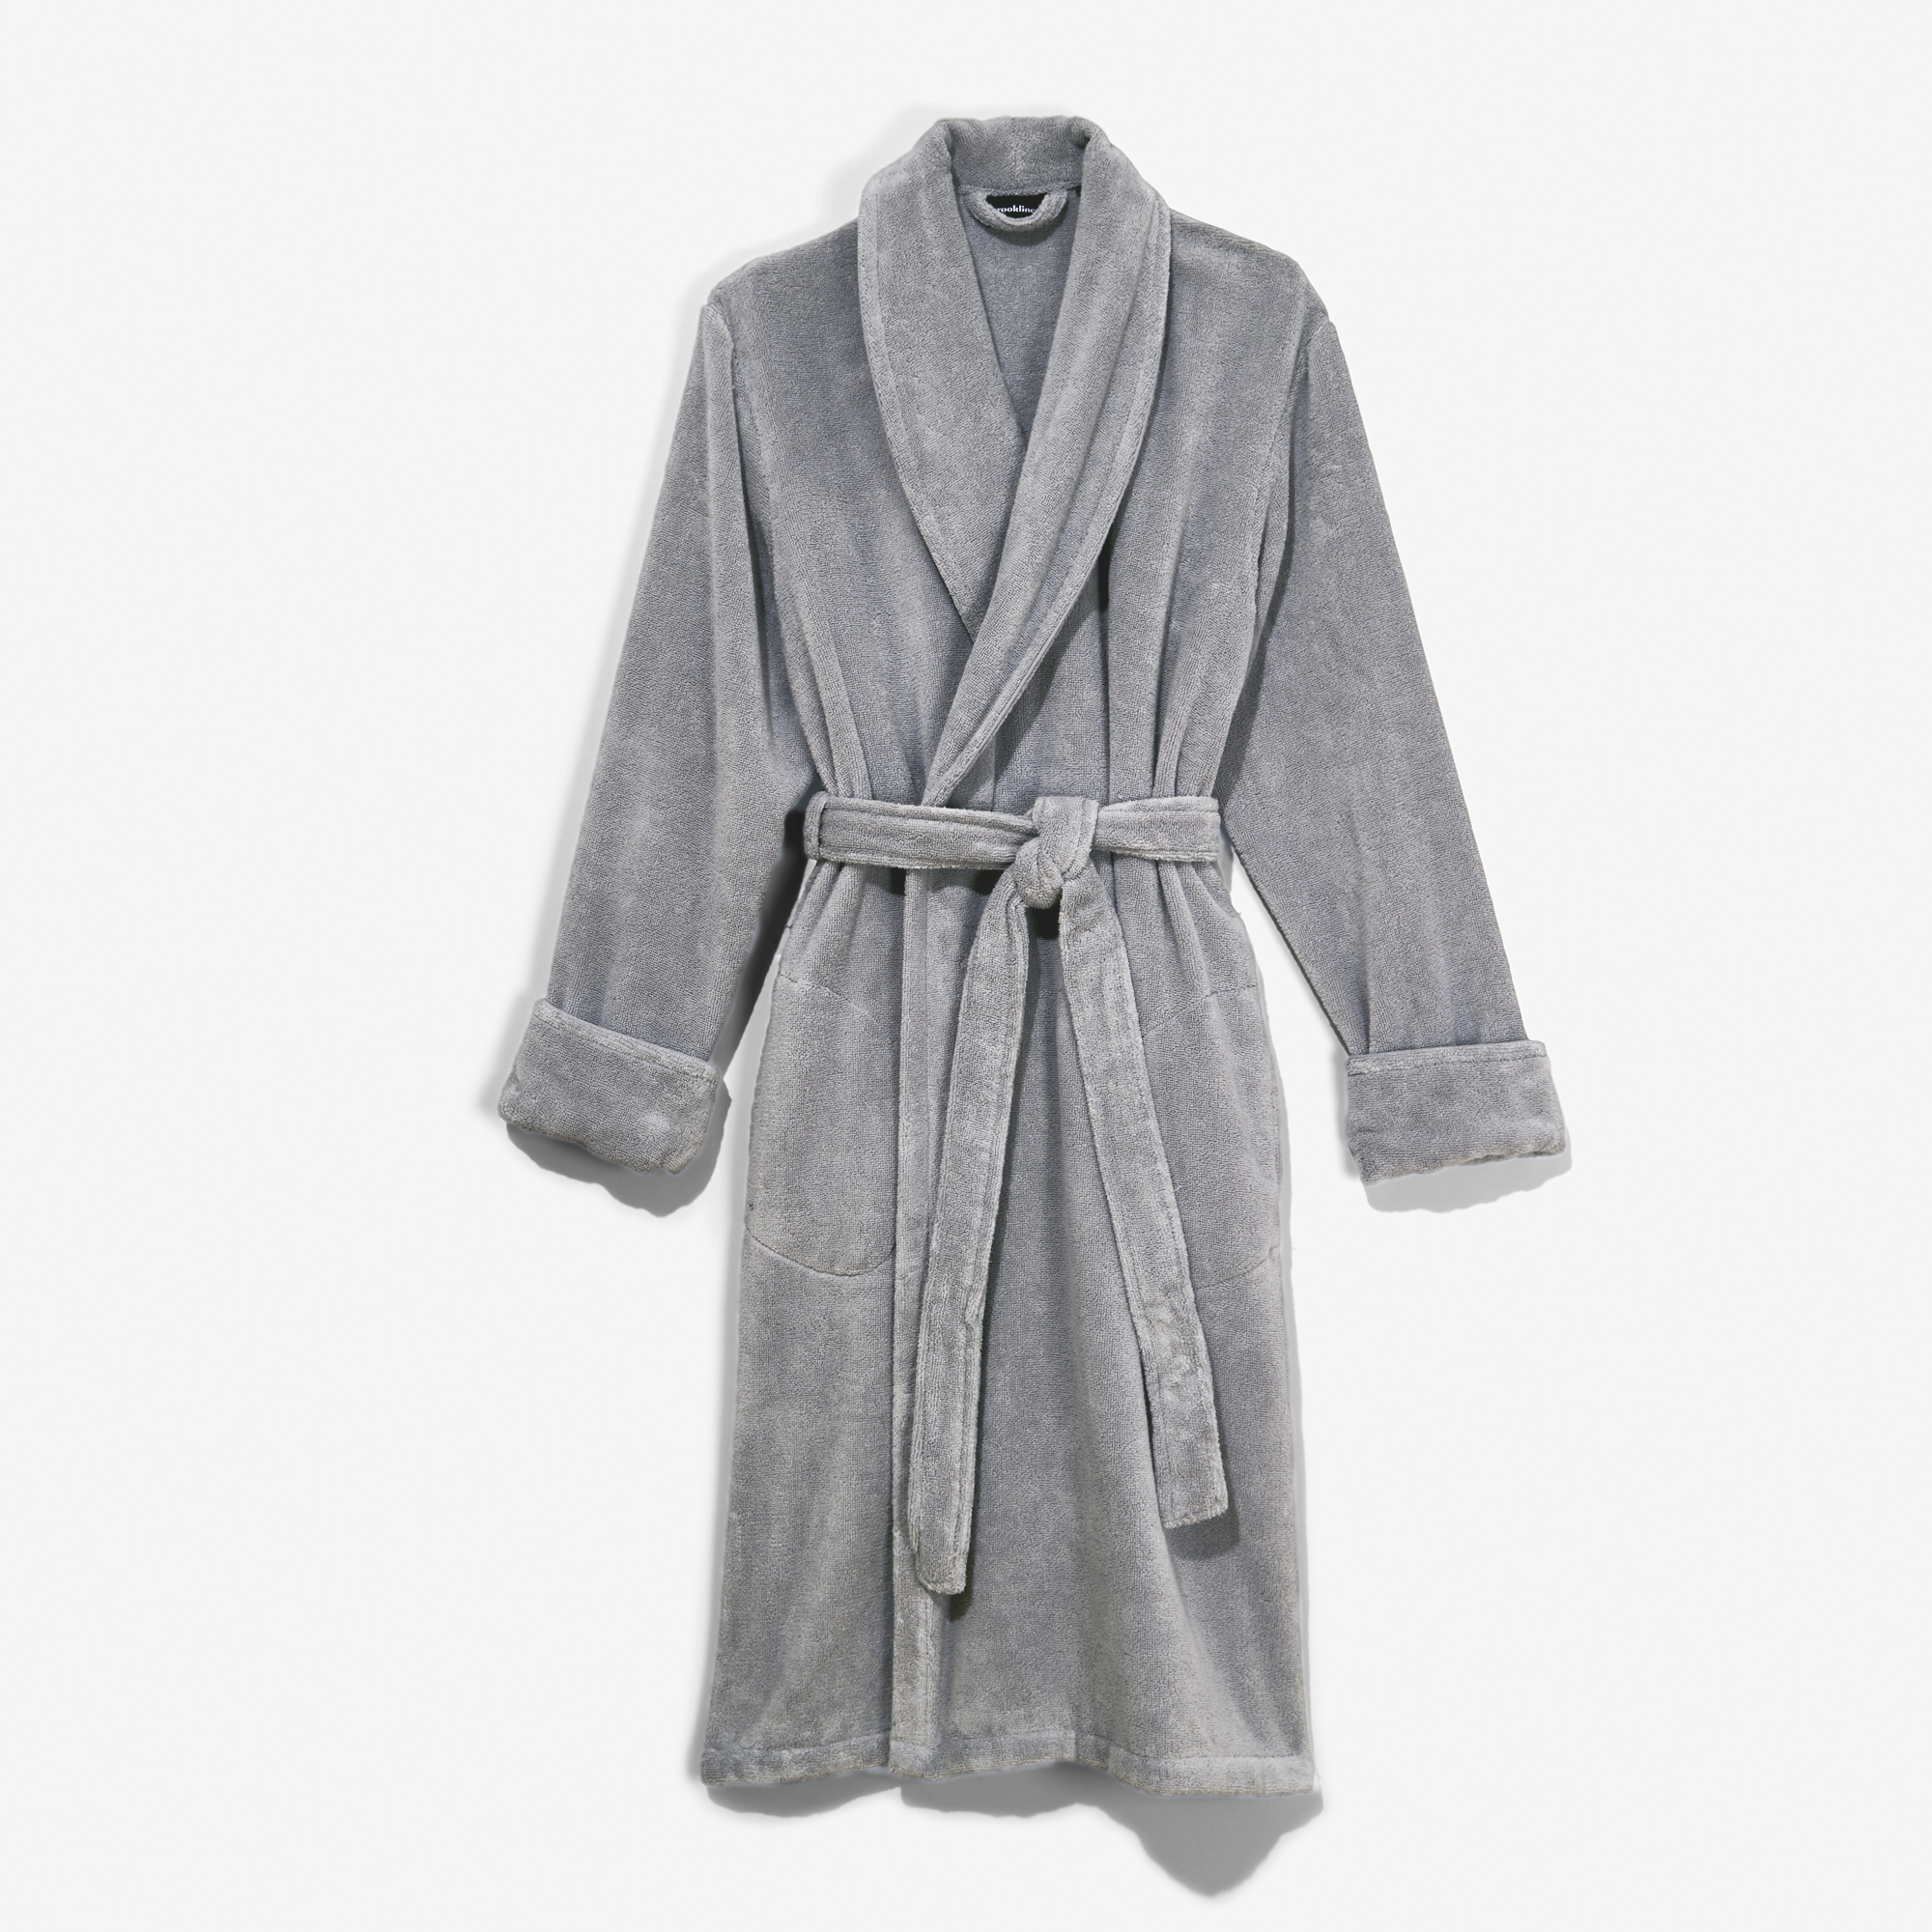 Comfortable robe